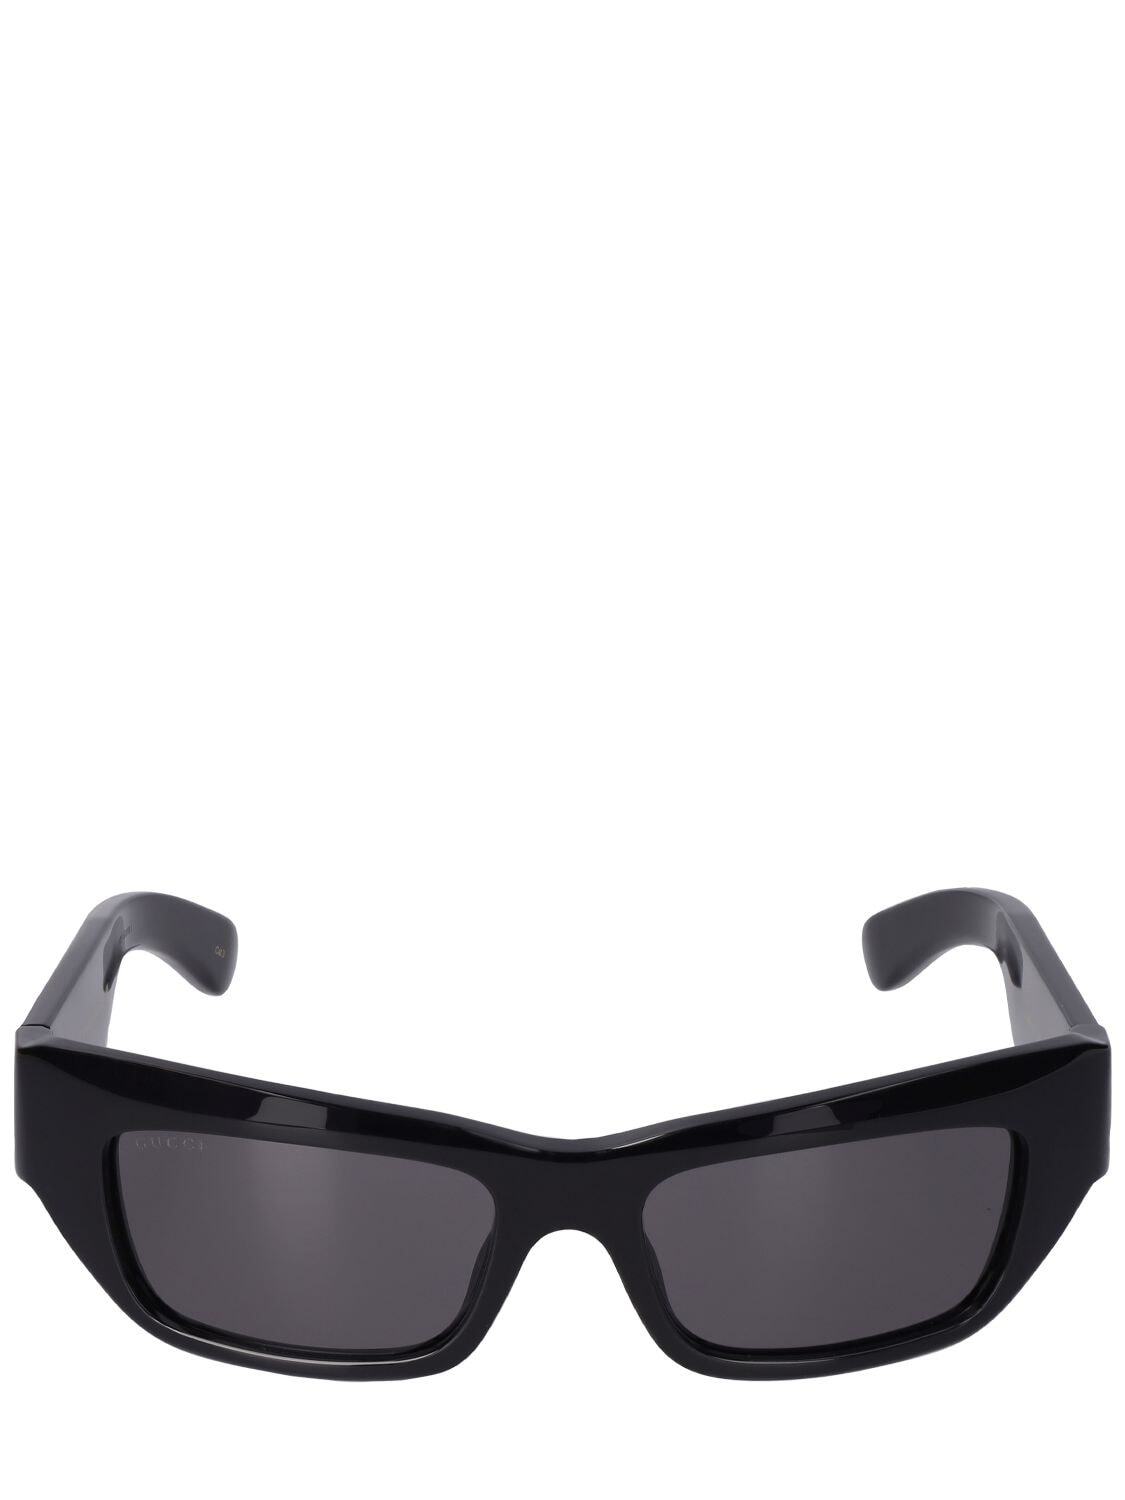 GUCCI Gg1296s Man Acetate Sunglasses in black / grey